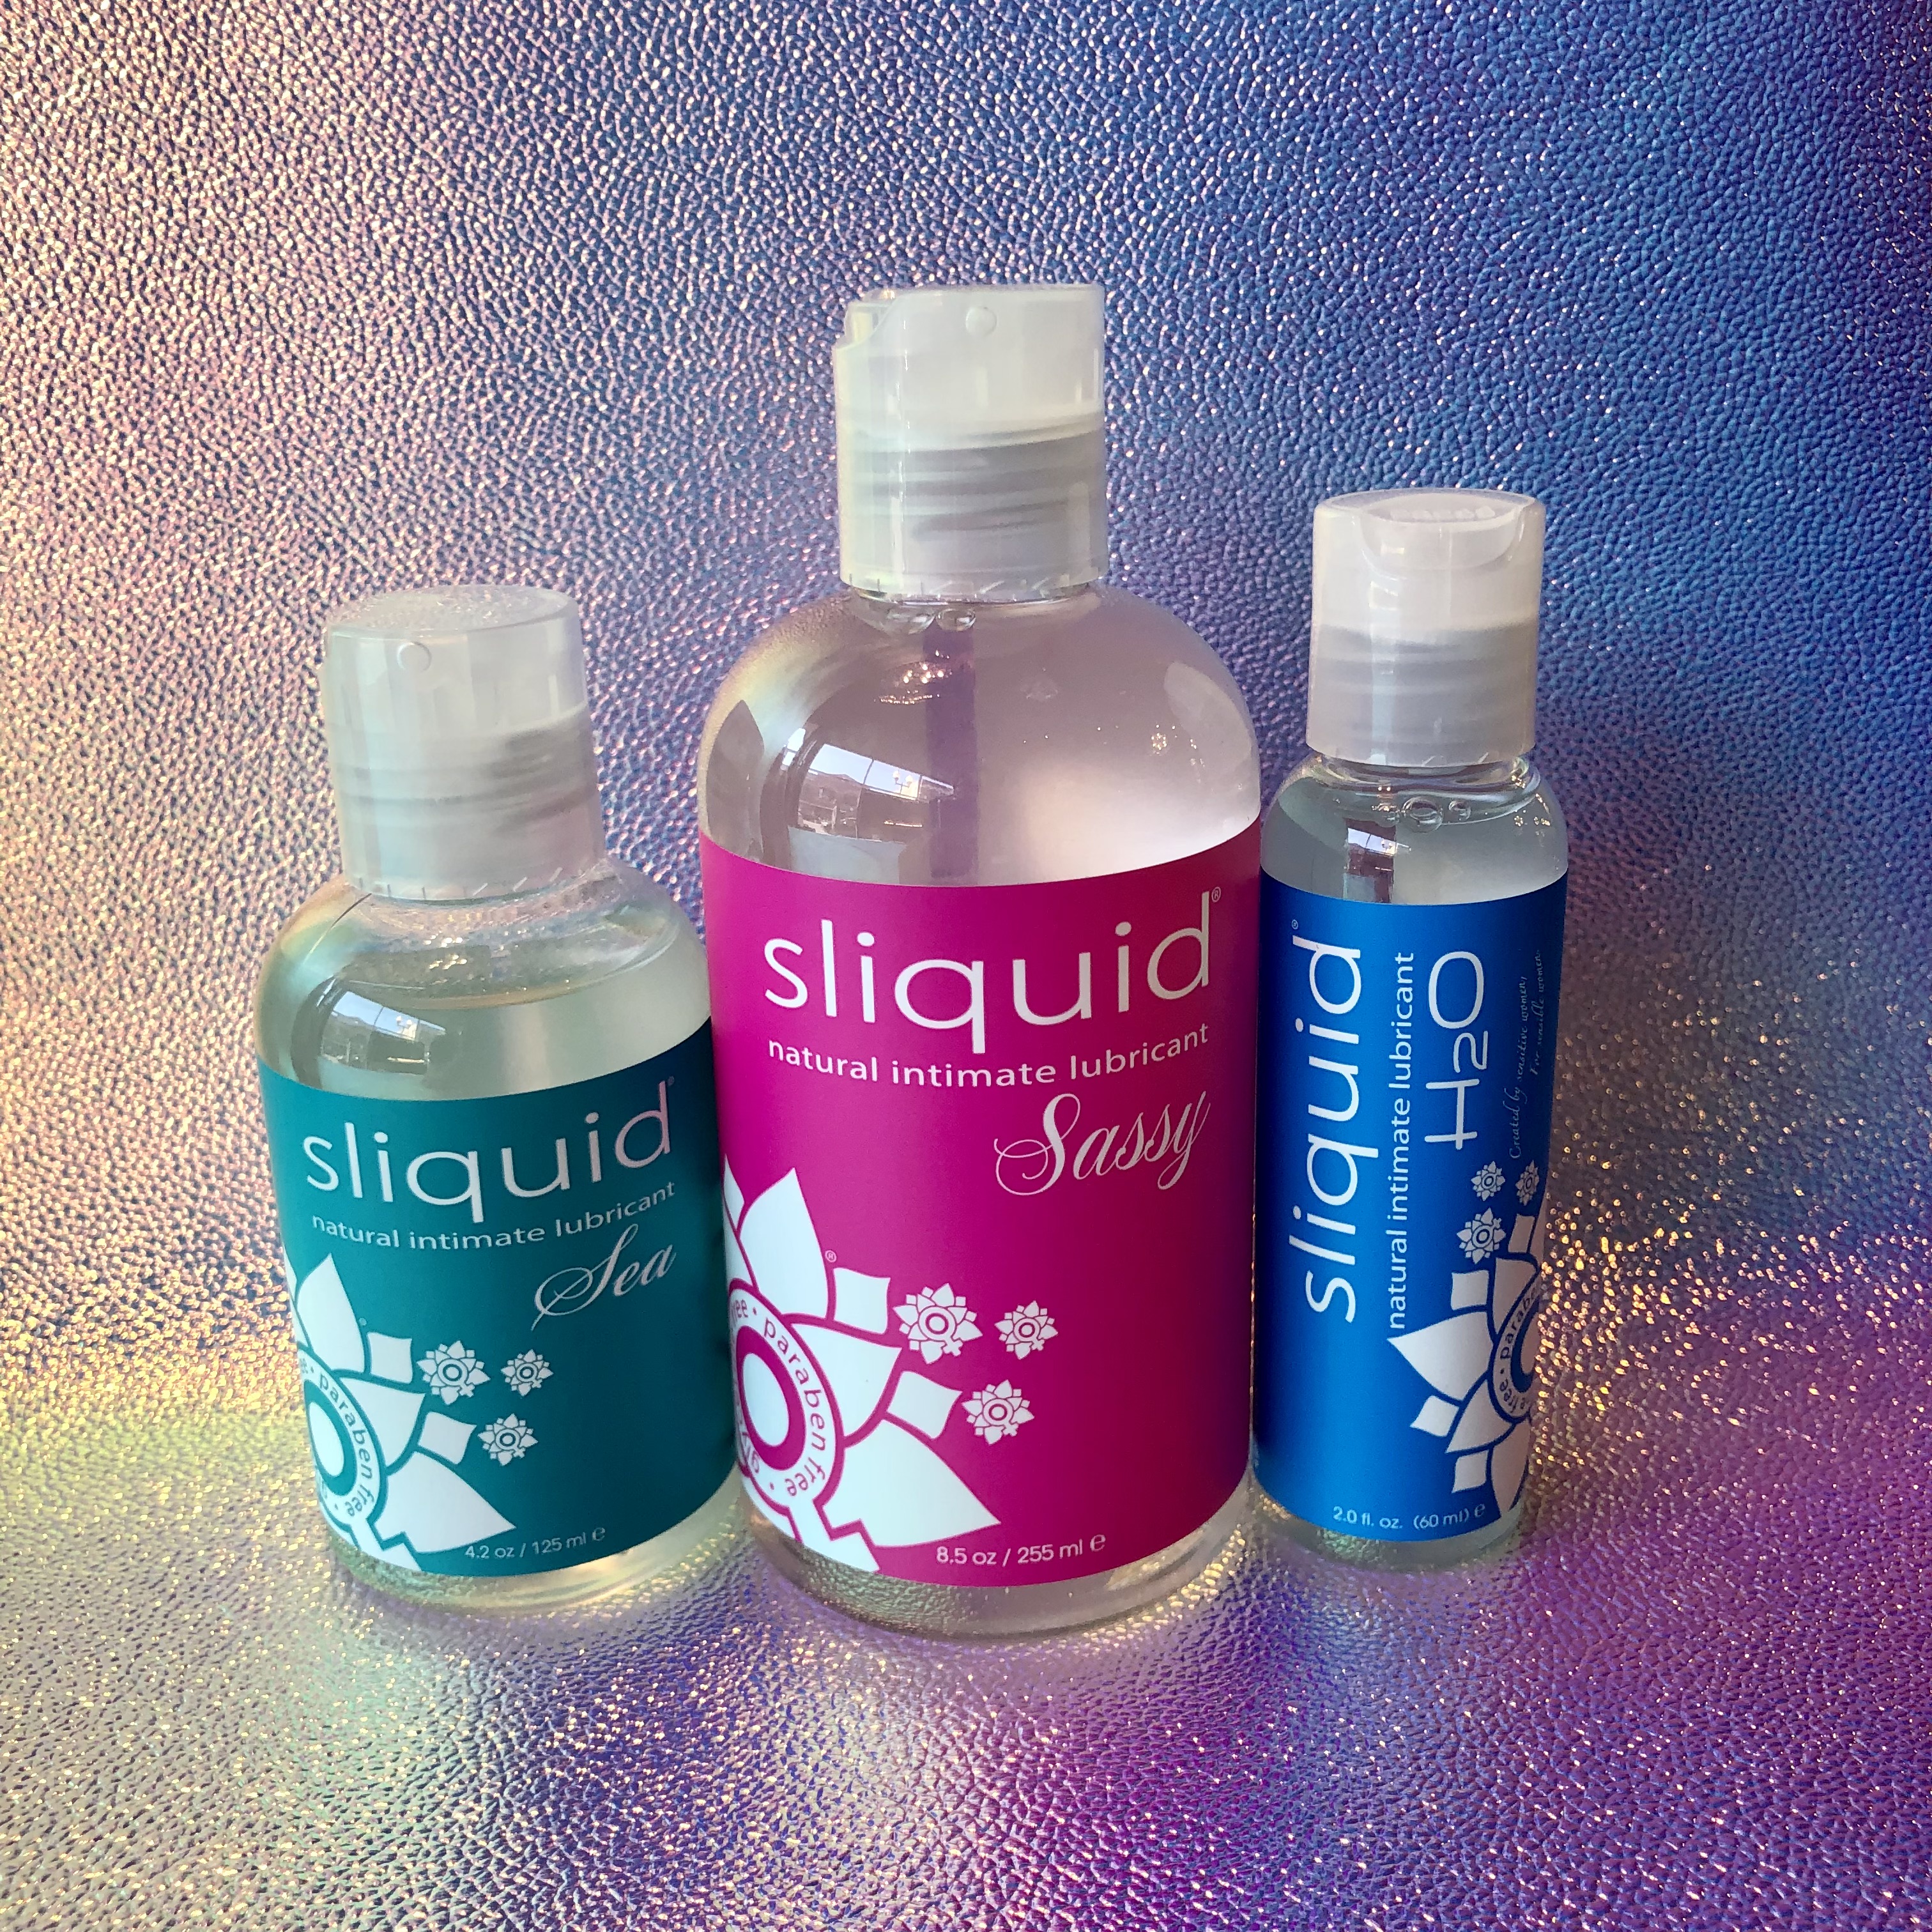 Sliquid lubricants product line